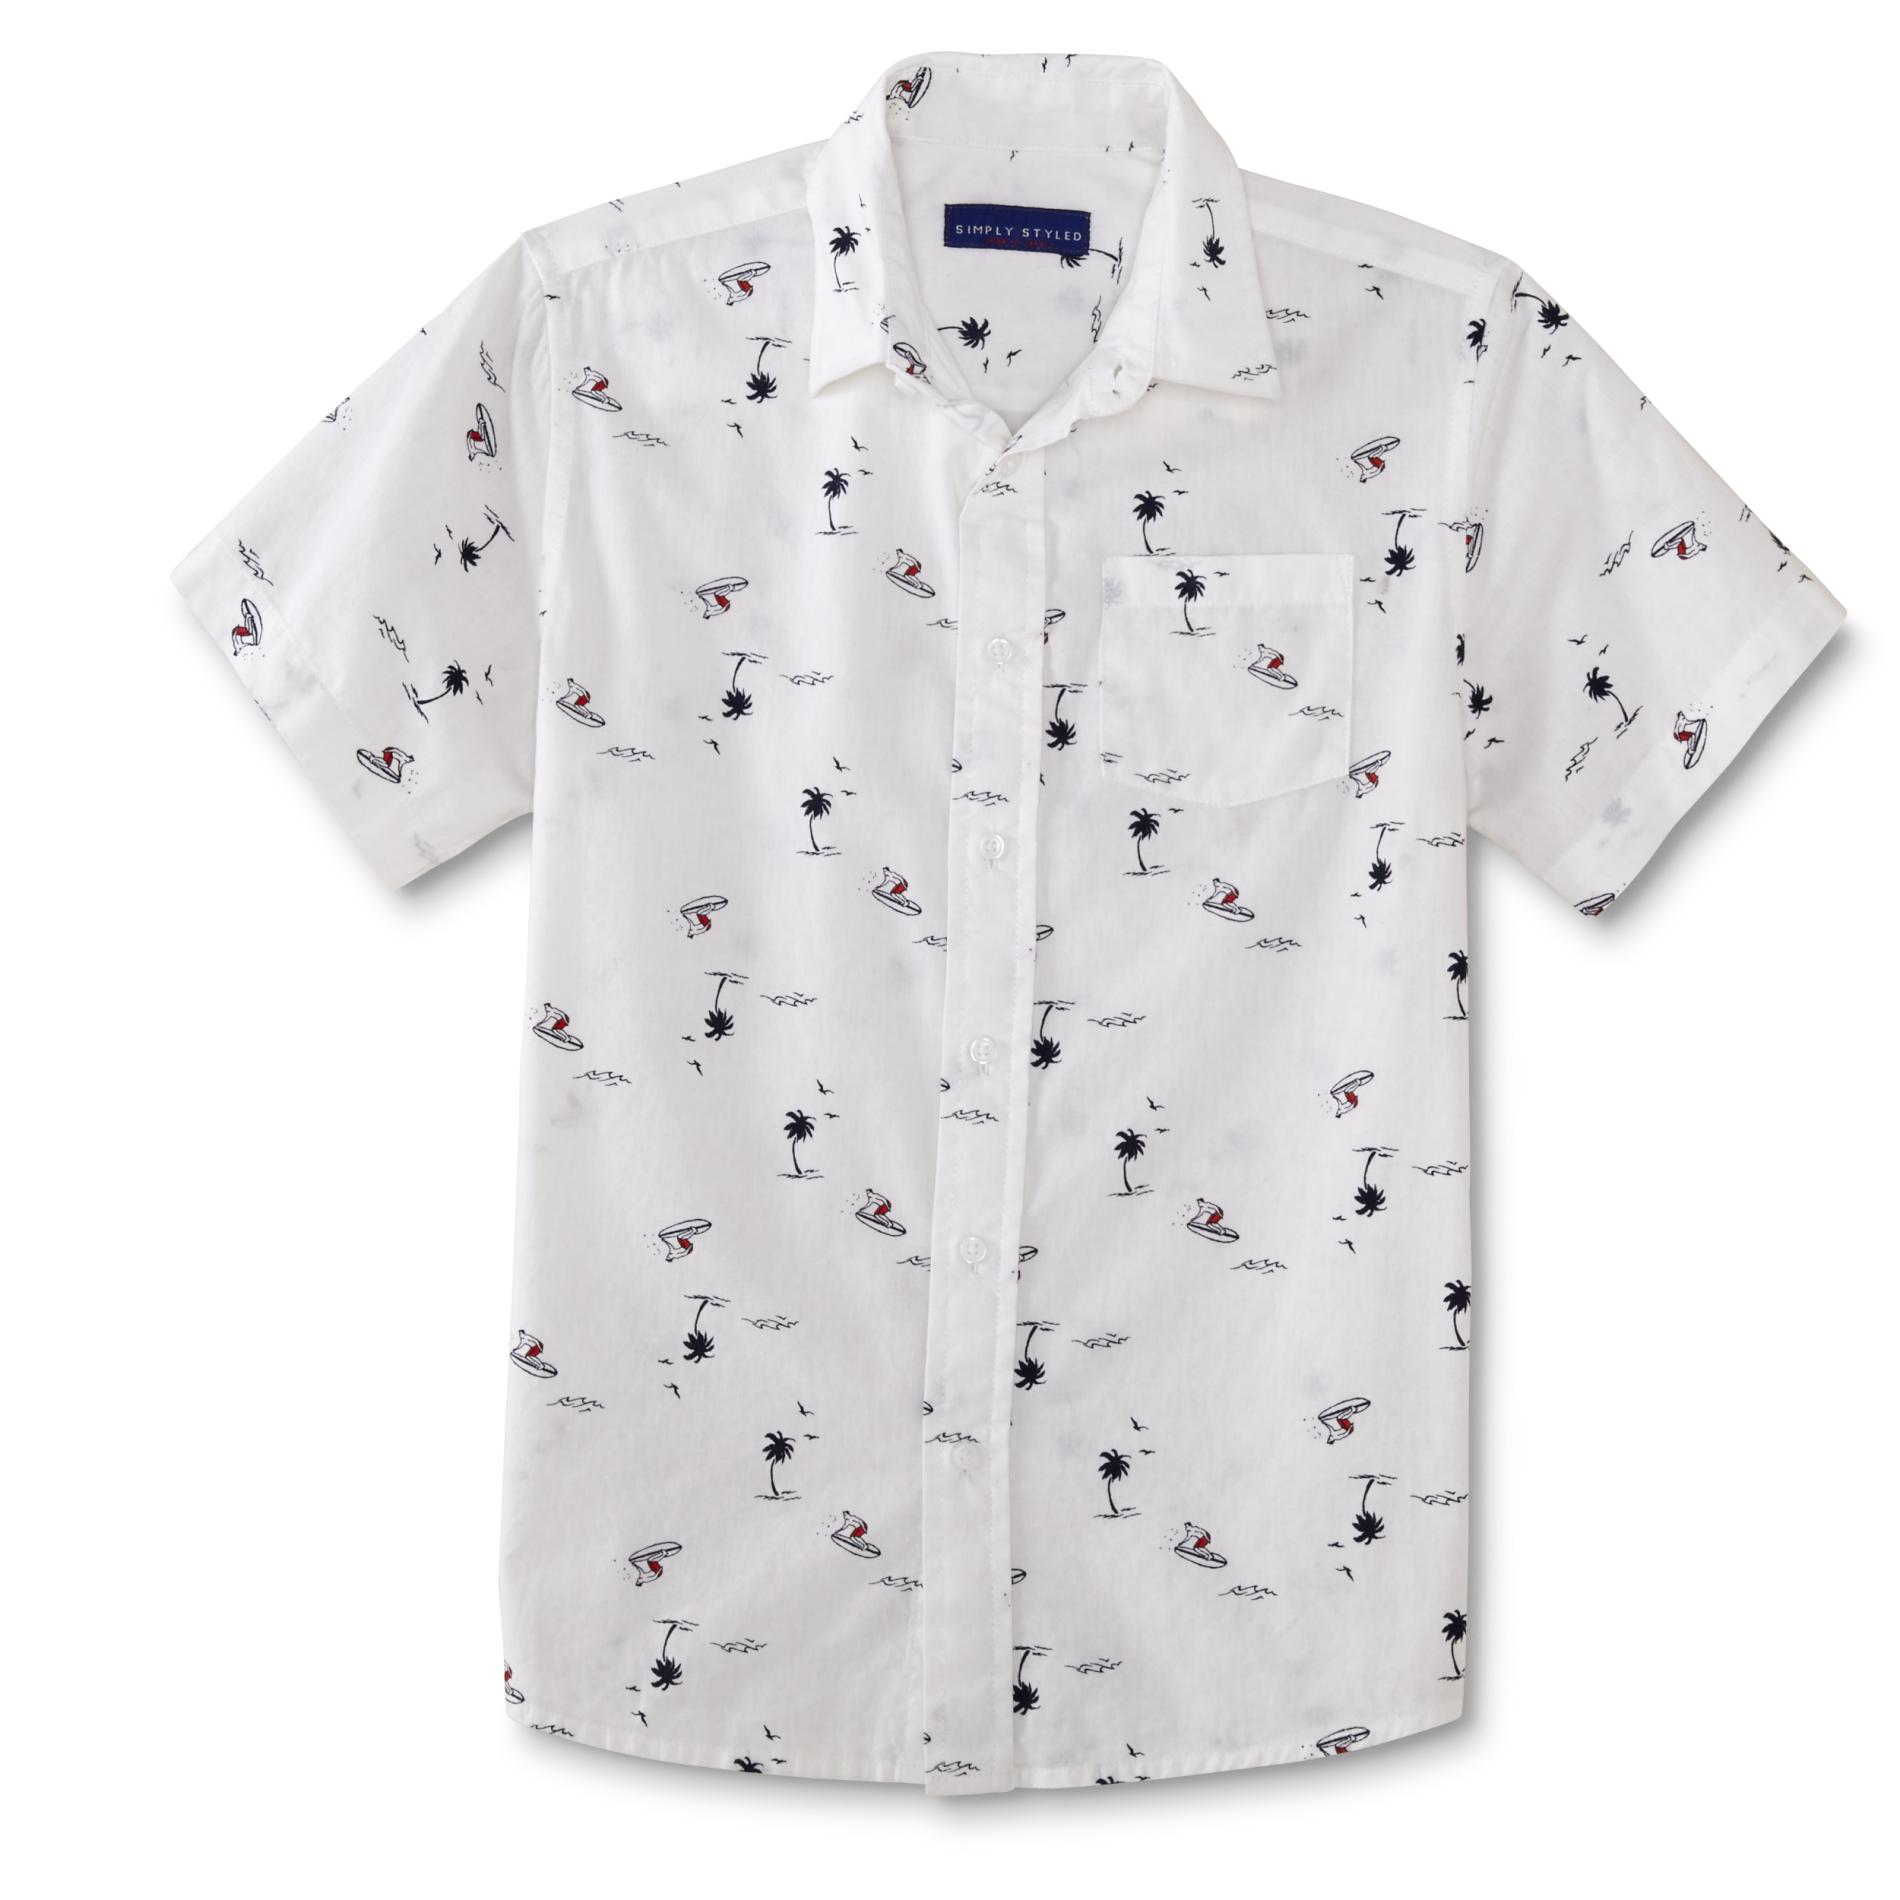 Simply Styled Boys' Short-Sleeve Button-Front Shirt - Beach